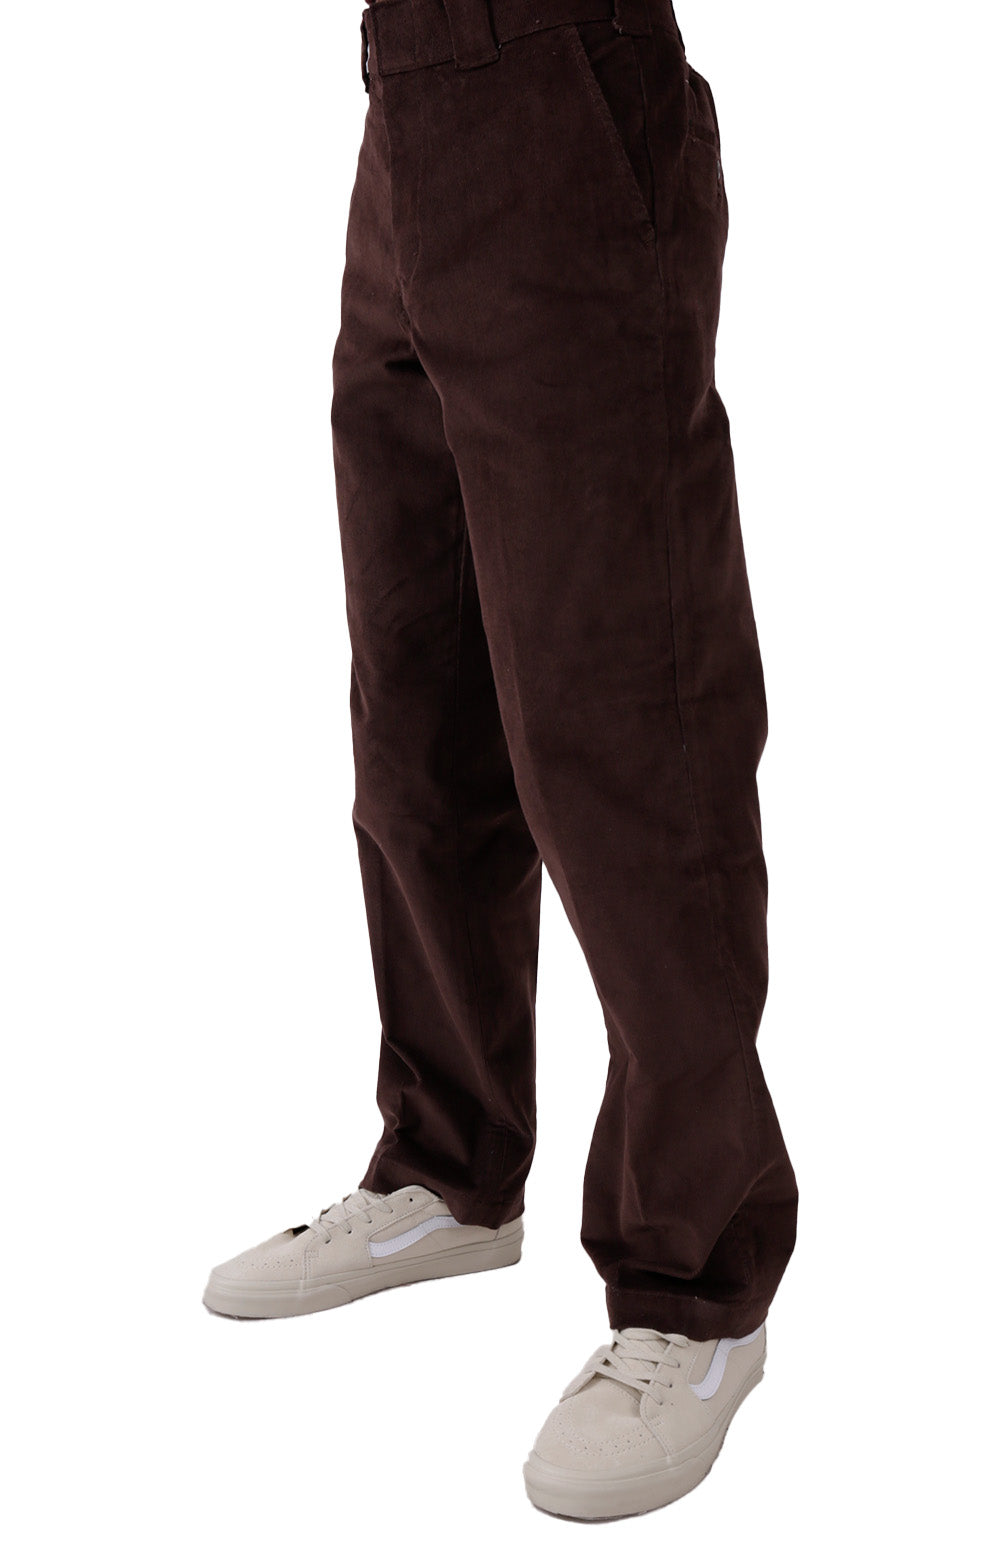 (WPR22CB) Flat Front Corduroy Pants - Chocolate Brown